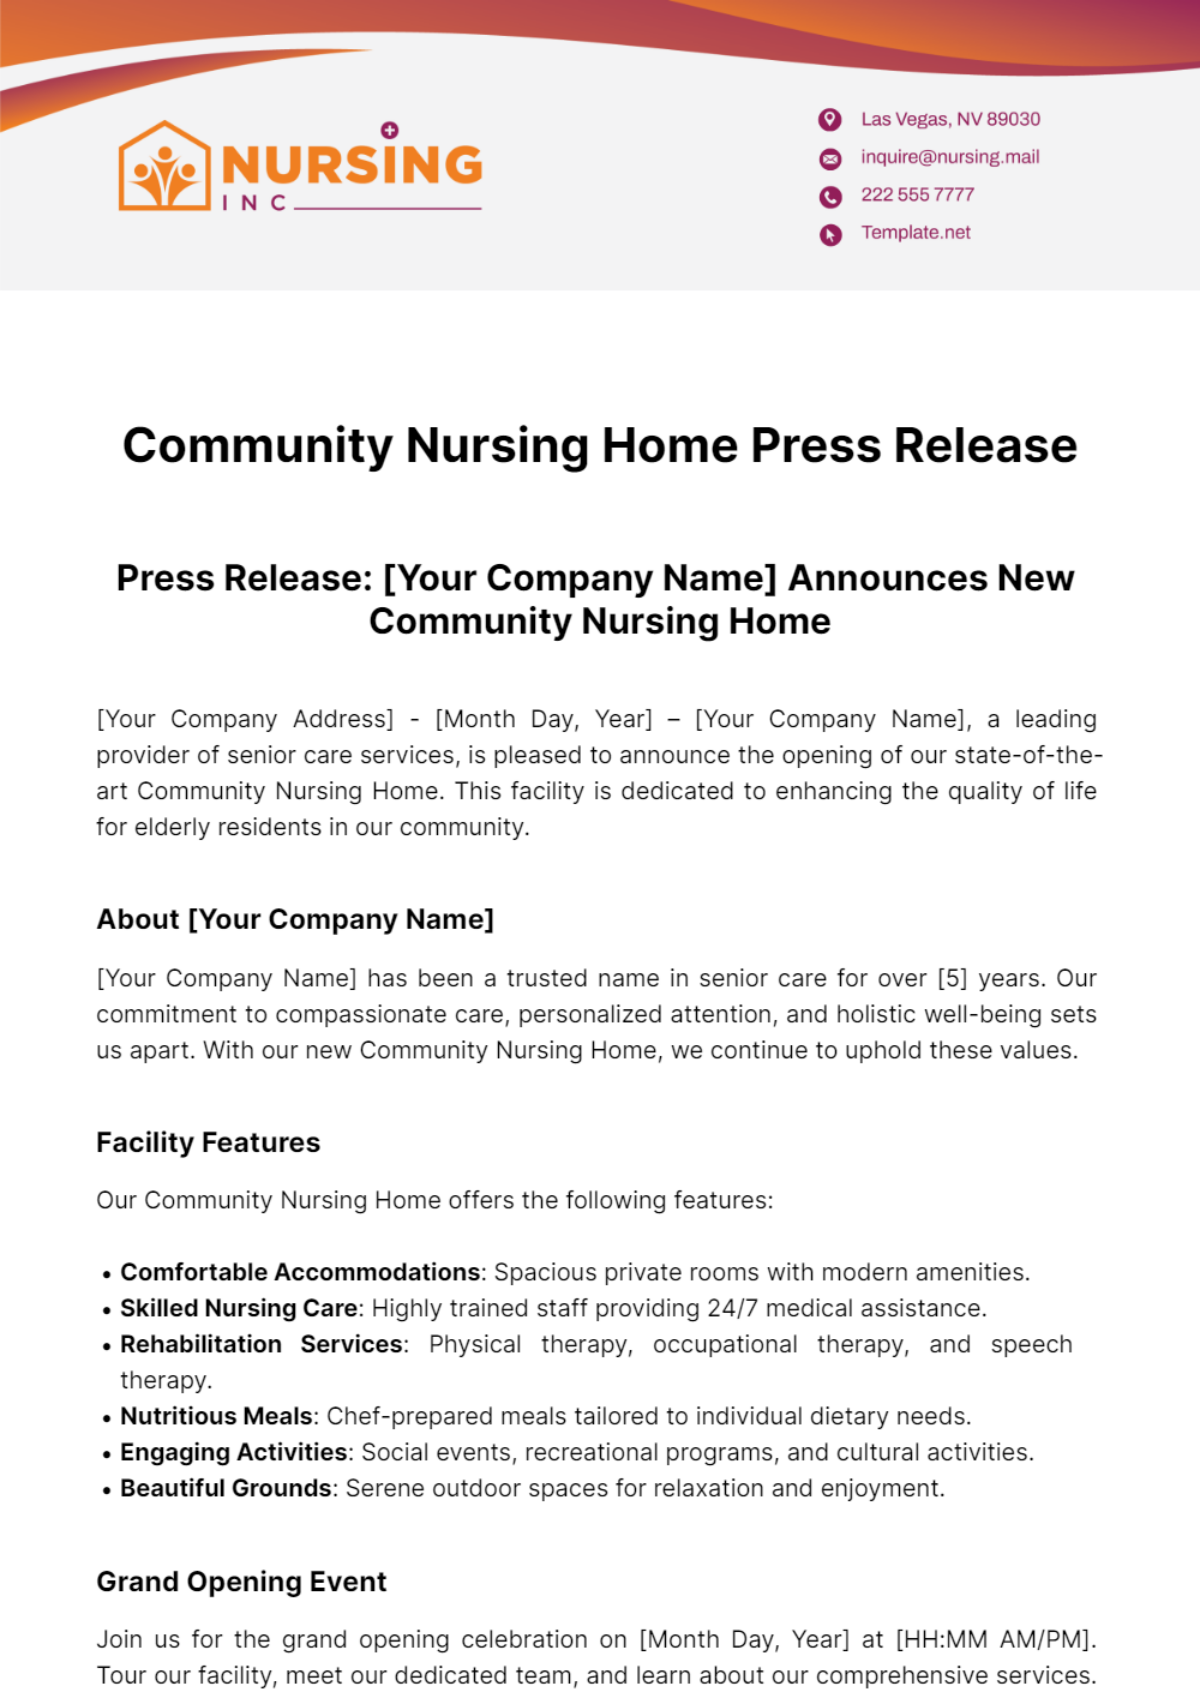 Free Community Nursing Home Press Release Template